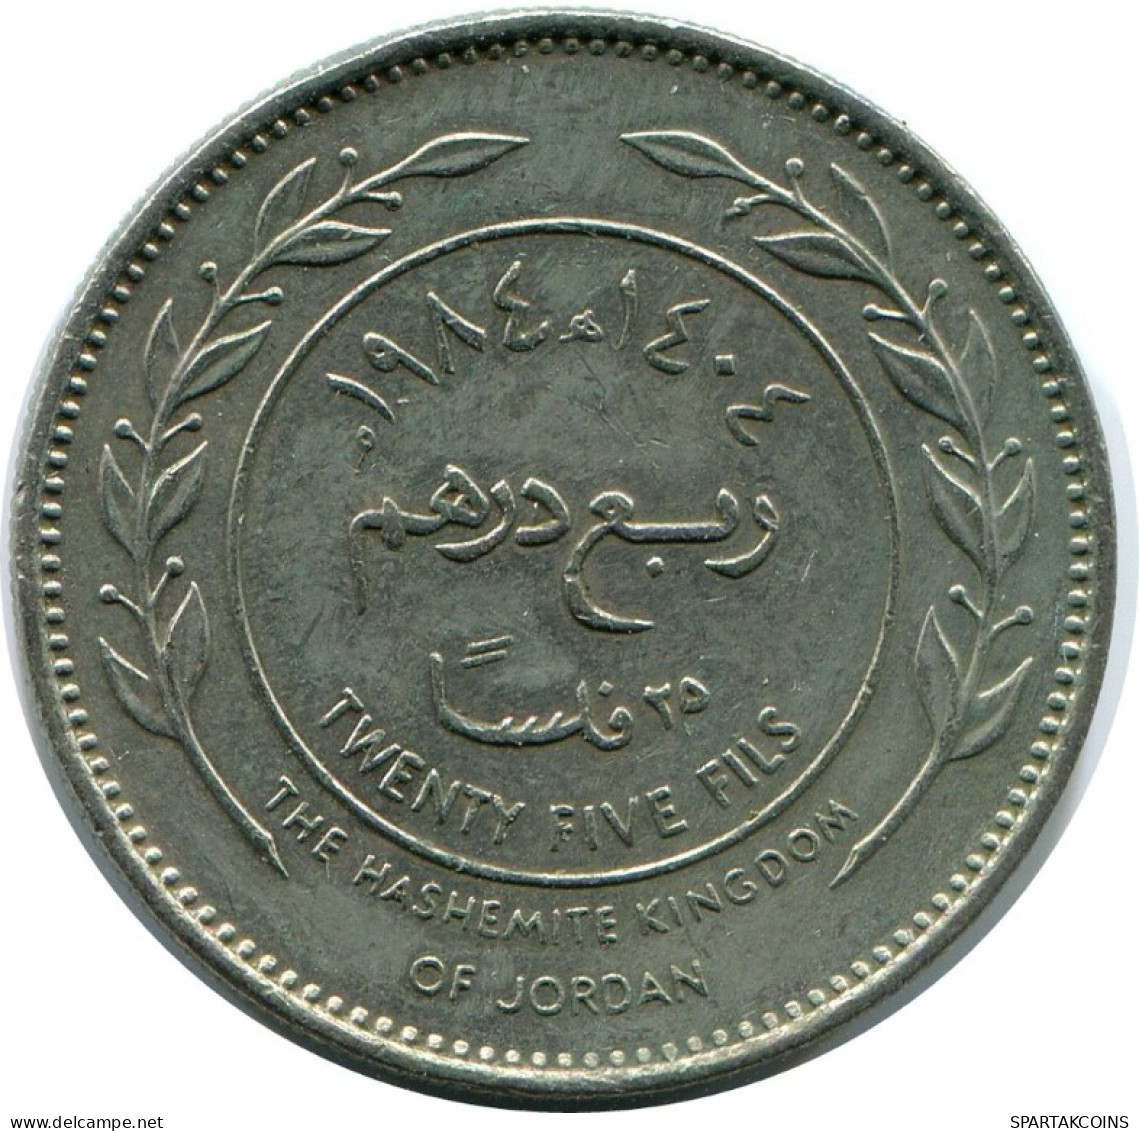 1/4 DIRHAM 25 FILS 1984 JORDAN Islamic Coin #AK157.U.A - Giordania